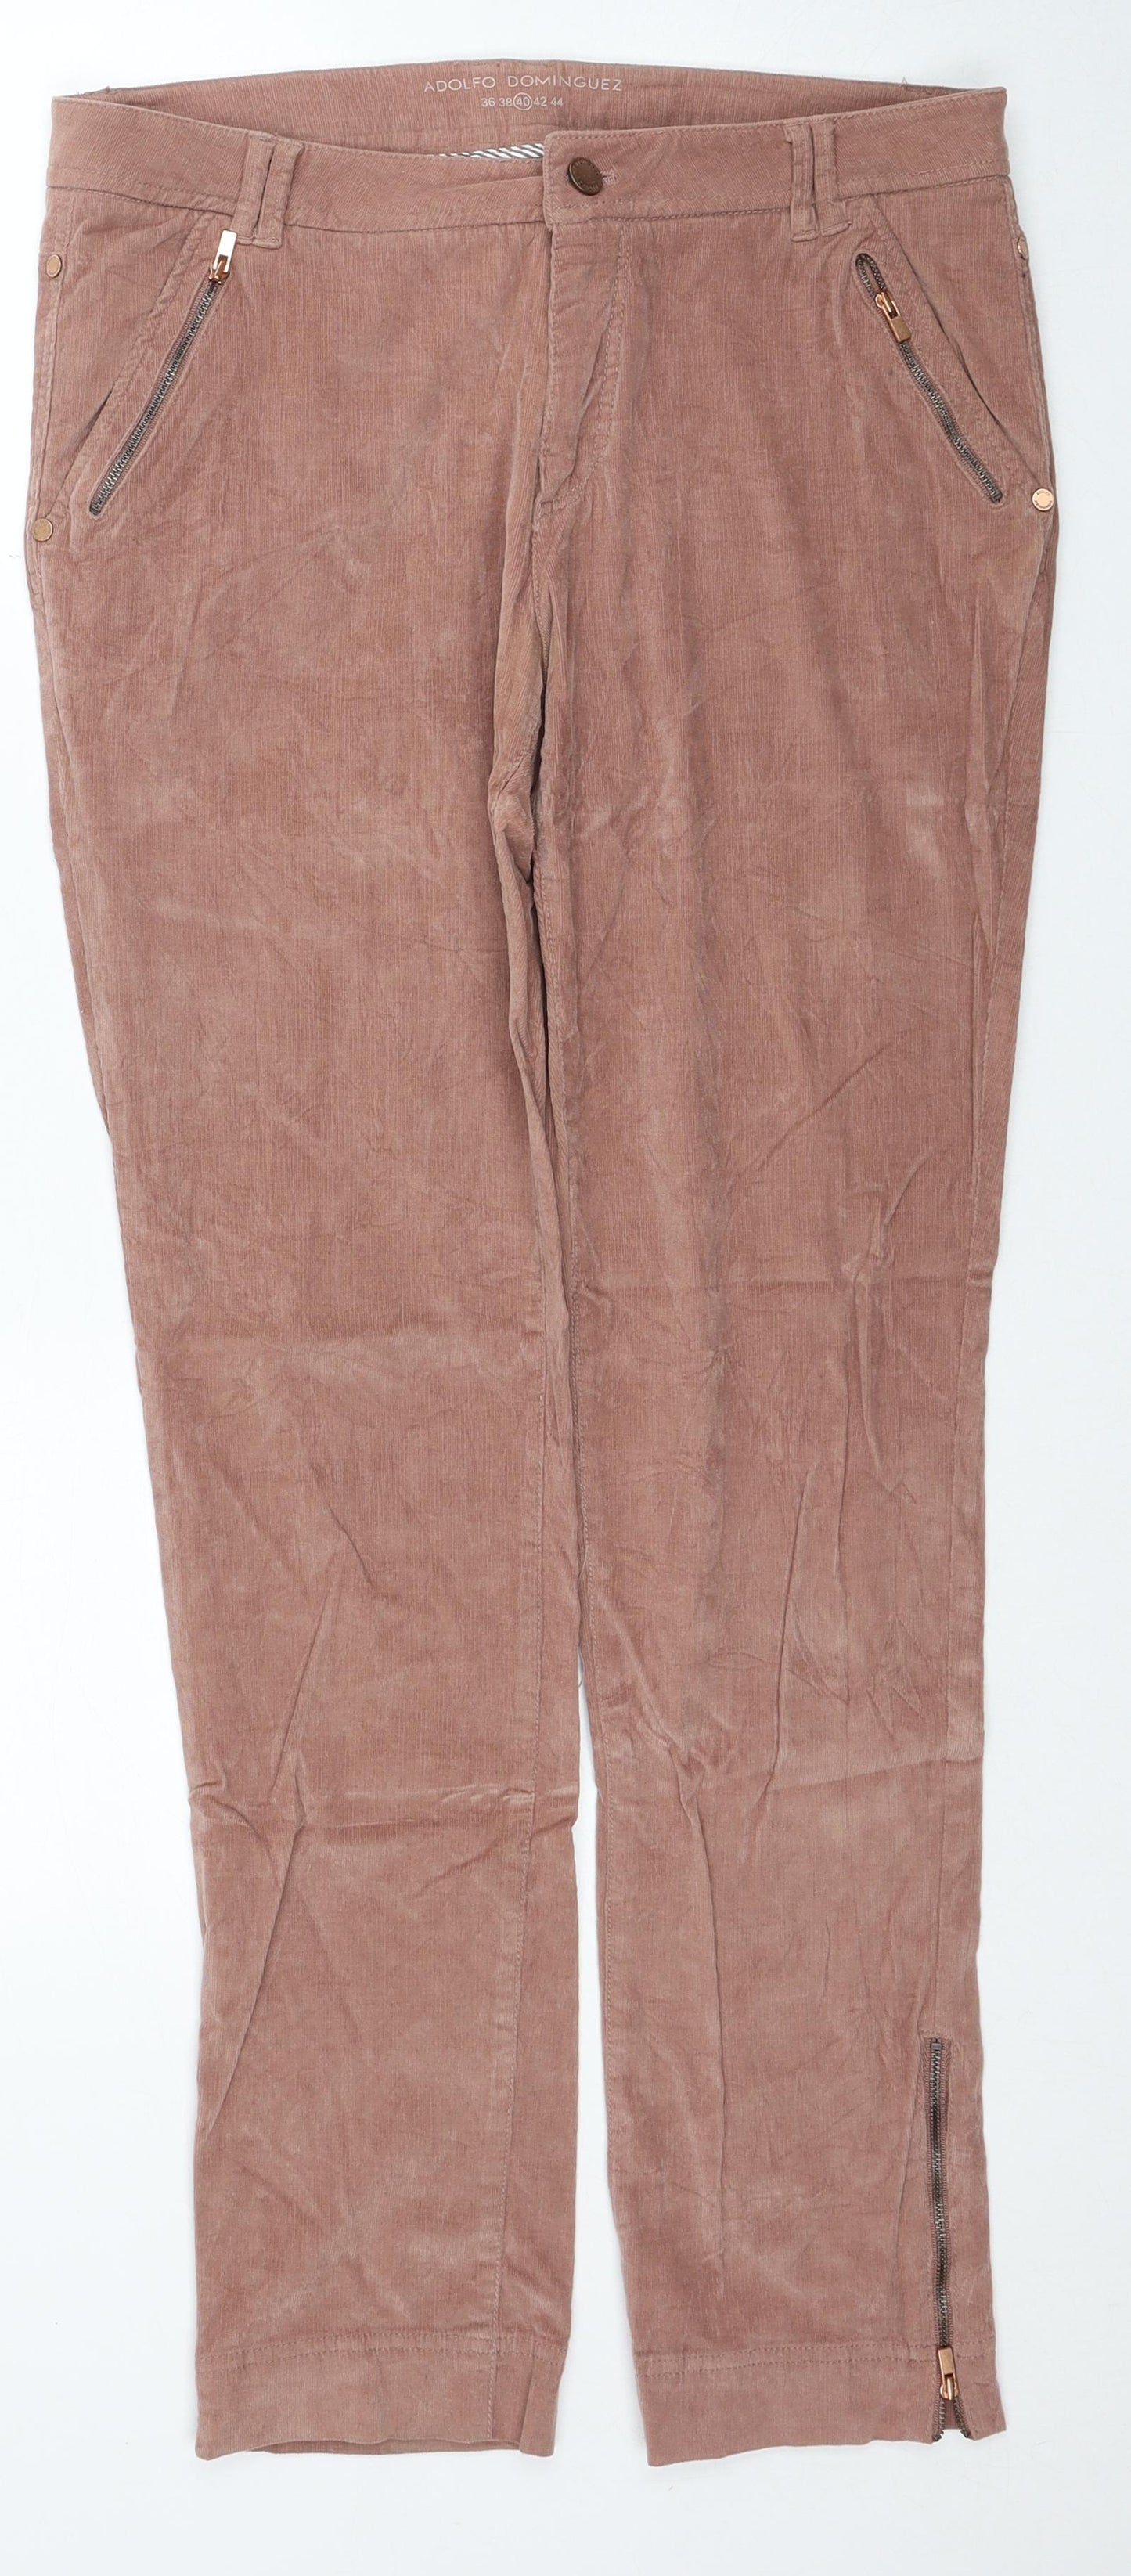 Adolfo Womens Beige Cotton Trousers Size 12 Regular Zip - Ankle Zips